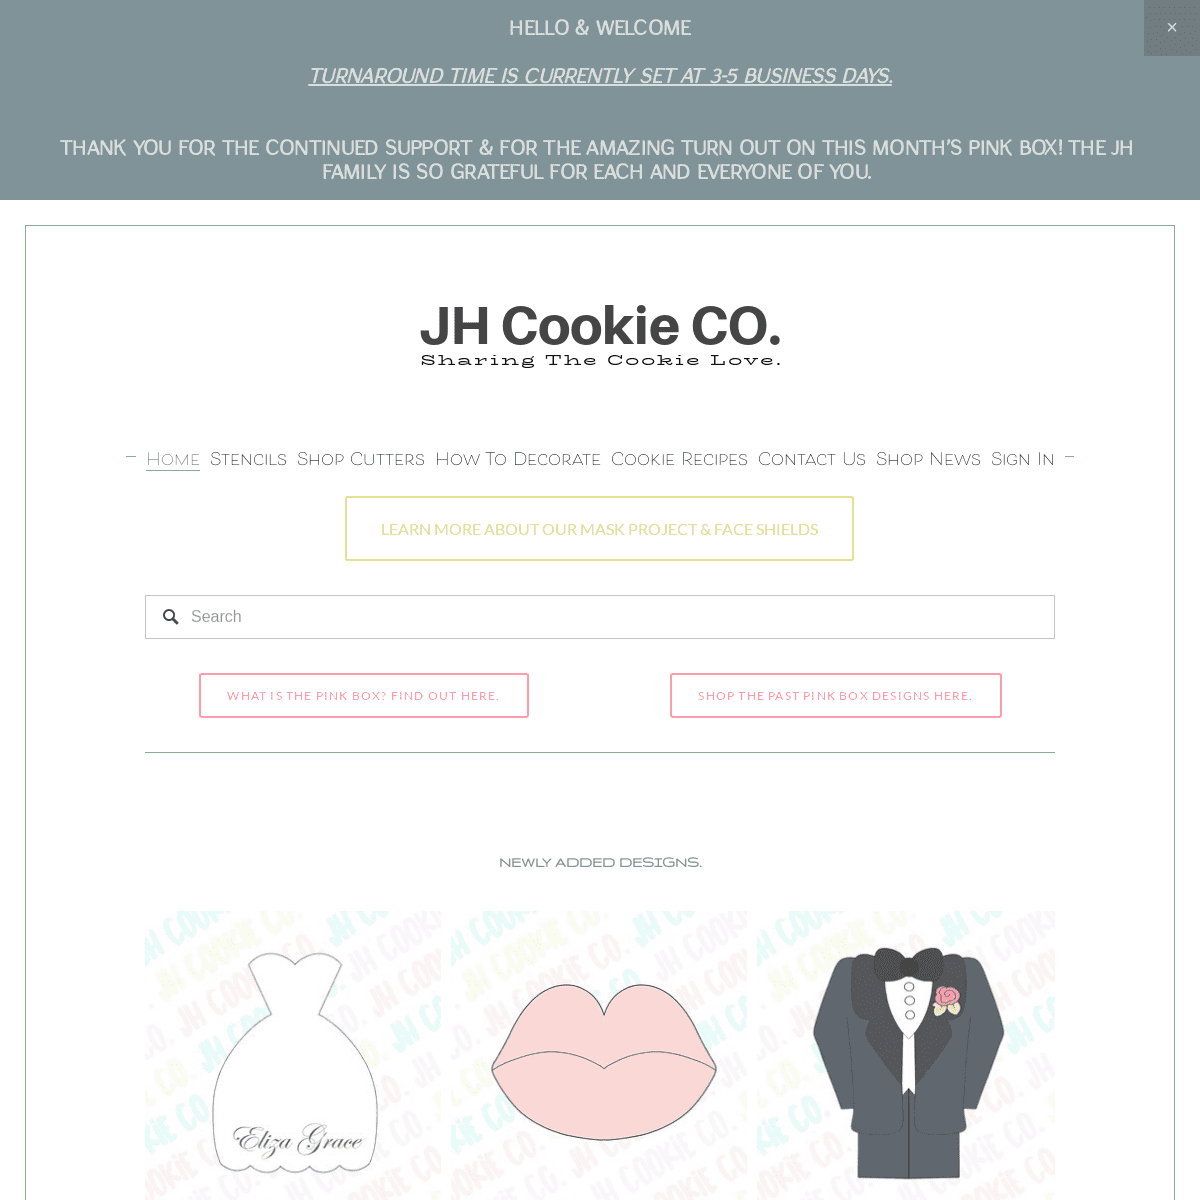 A complete backup of jhcookieco.com